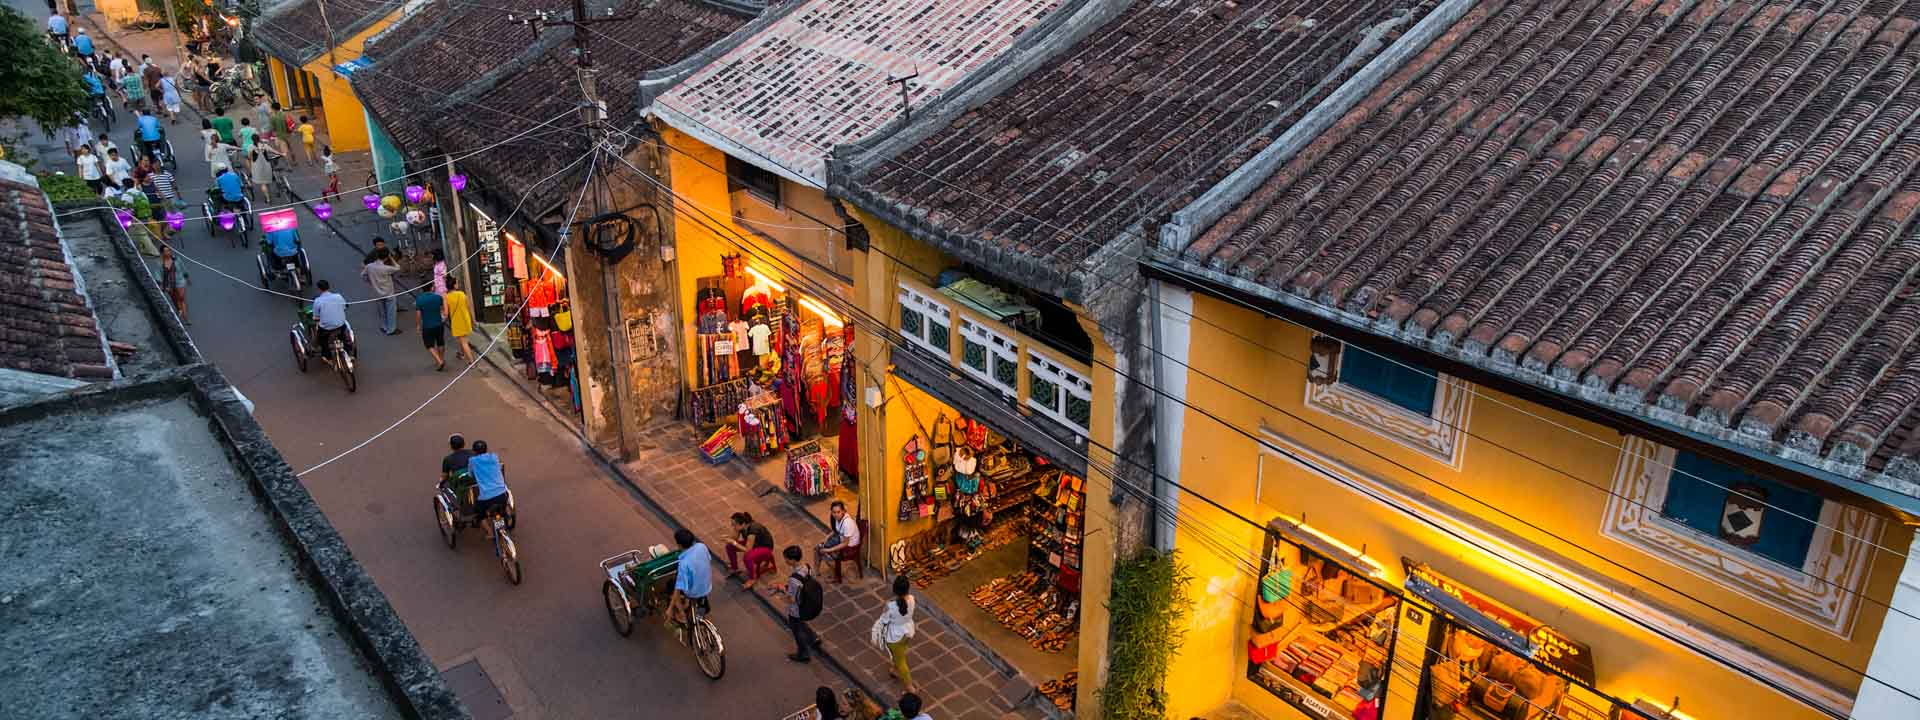 Exploring Vietnam’s Cultural Heritage 9 Days